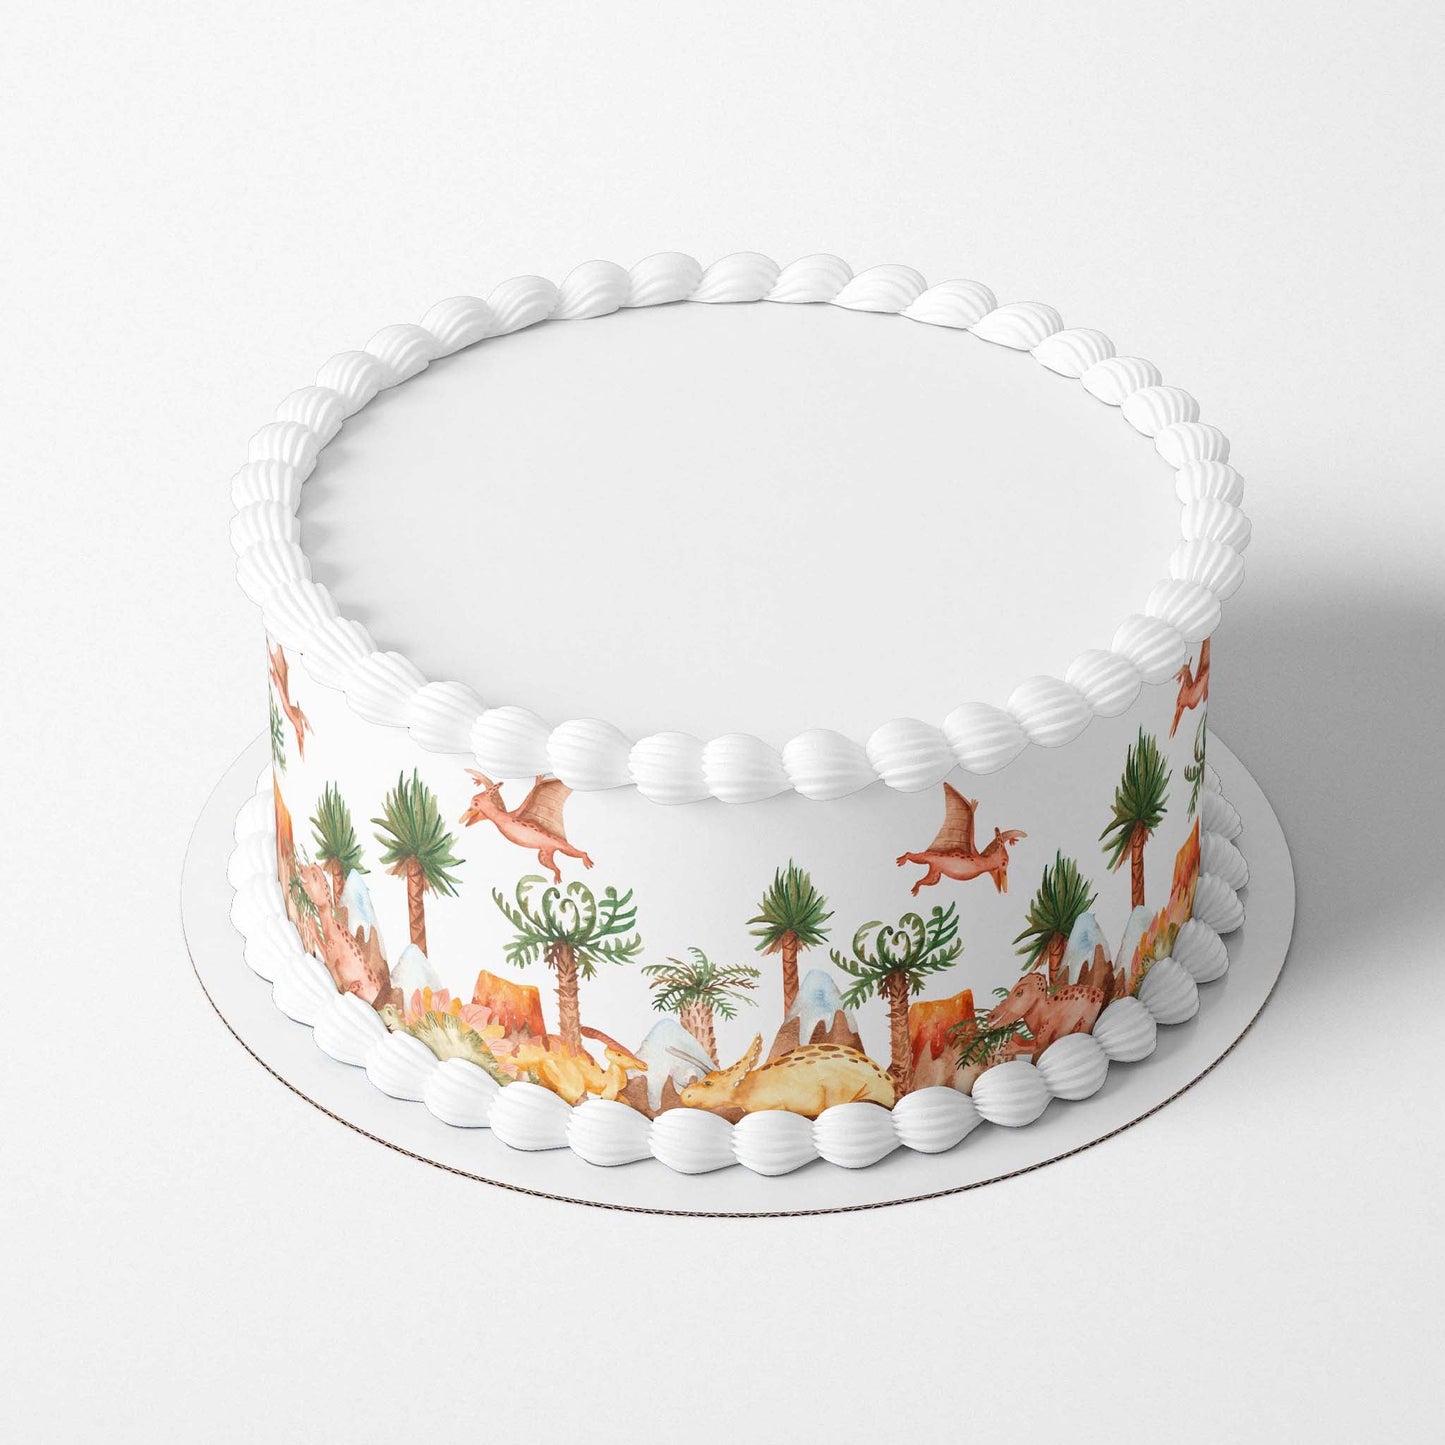 Dinosaur - Edible Icing Cake Wrap - Set 2 - printsoncakes - Edible Image service provider